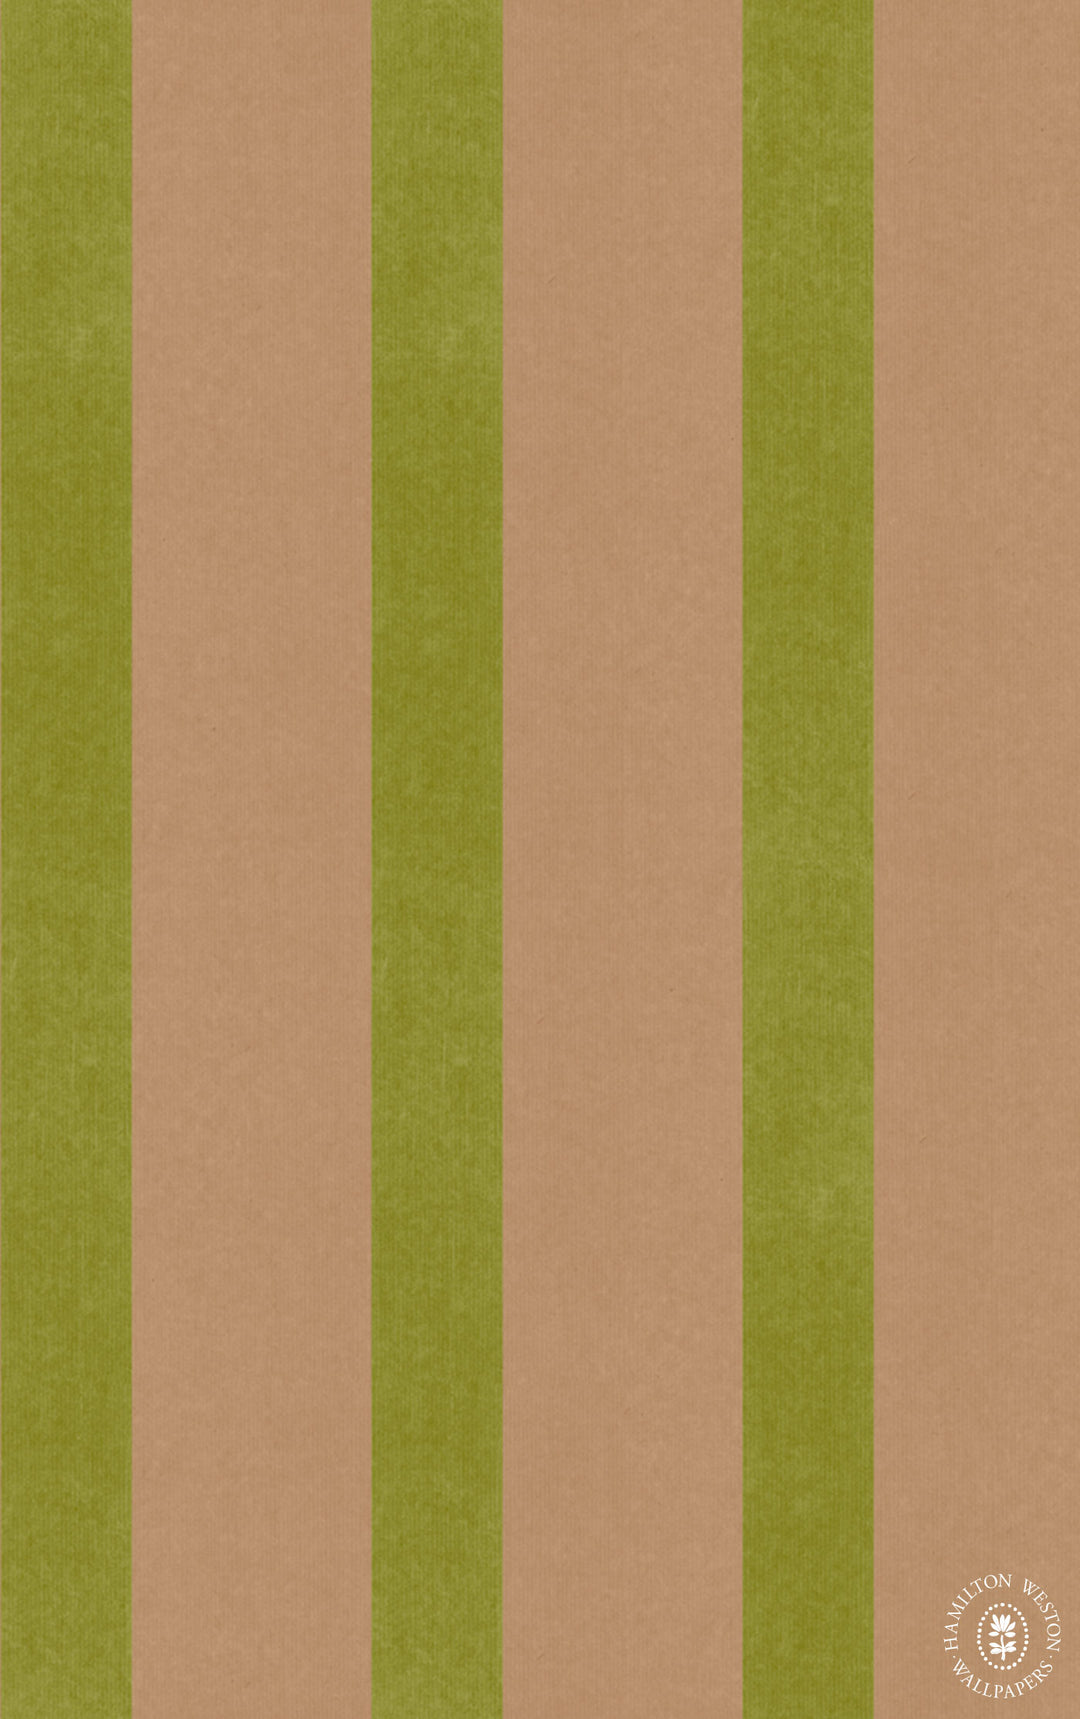 Adam Bray Brown Paper Stripe Wallpaper in Chartreuse